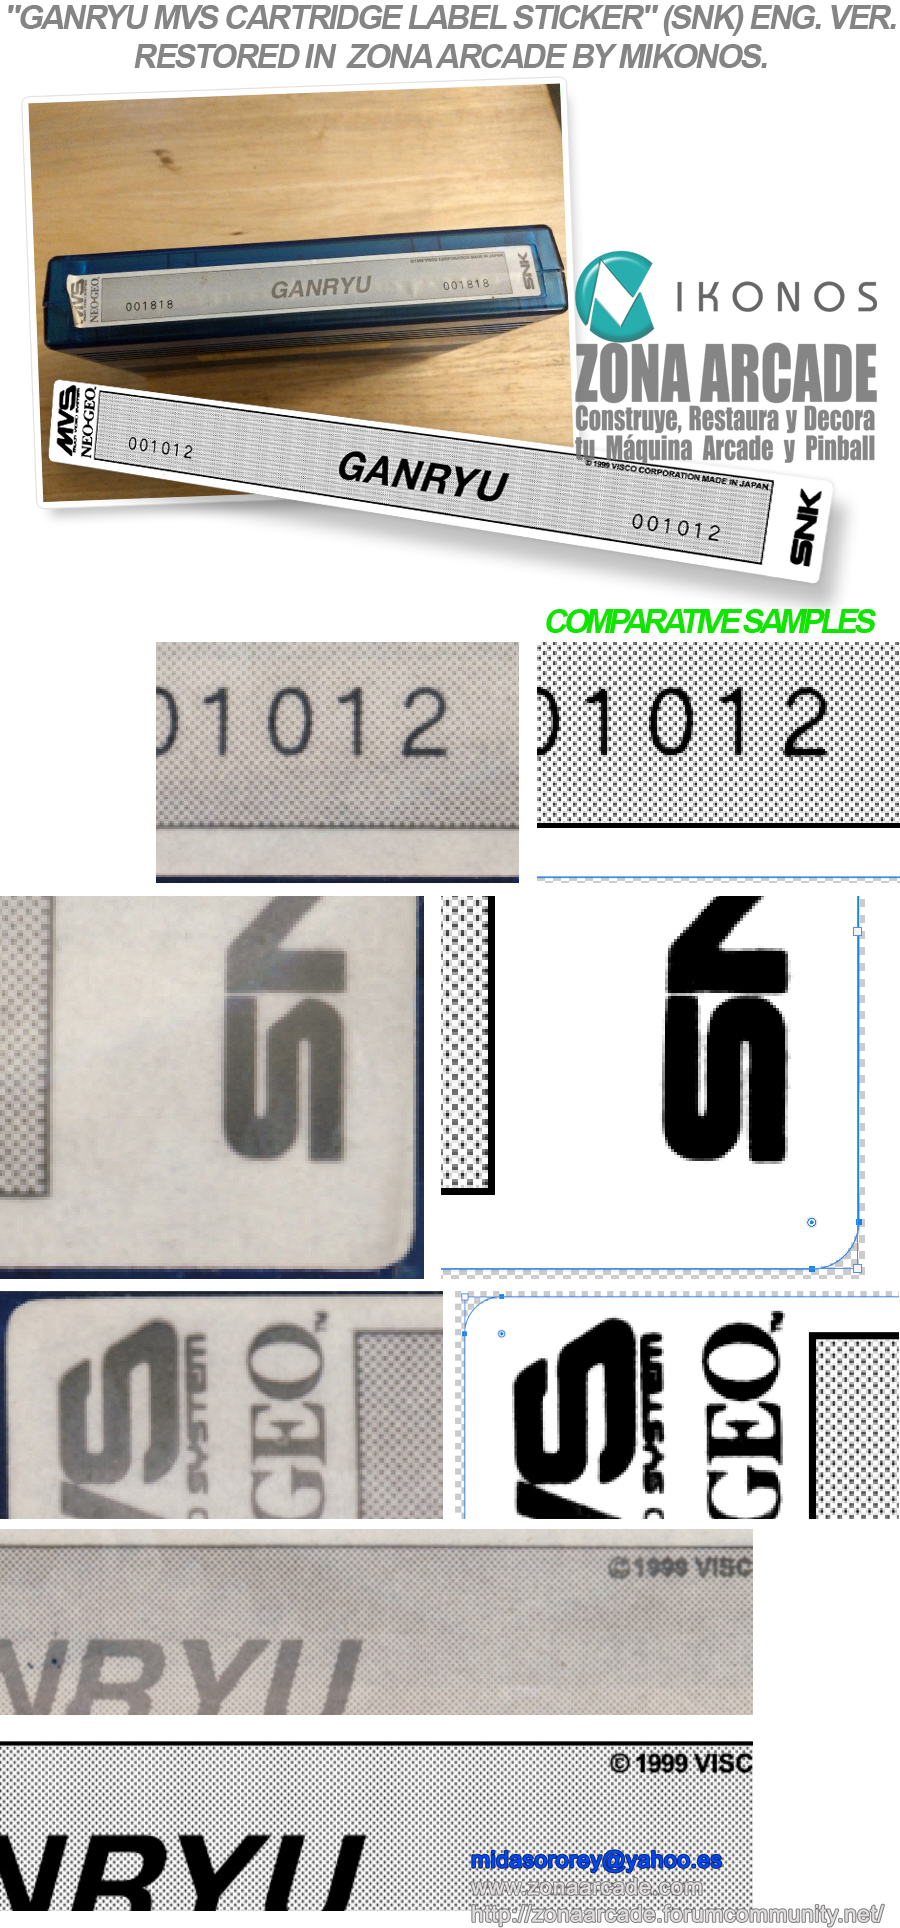 Ganryu-MVS-Cartridge-Label-Sticker-Restored-Mikonos1